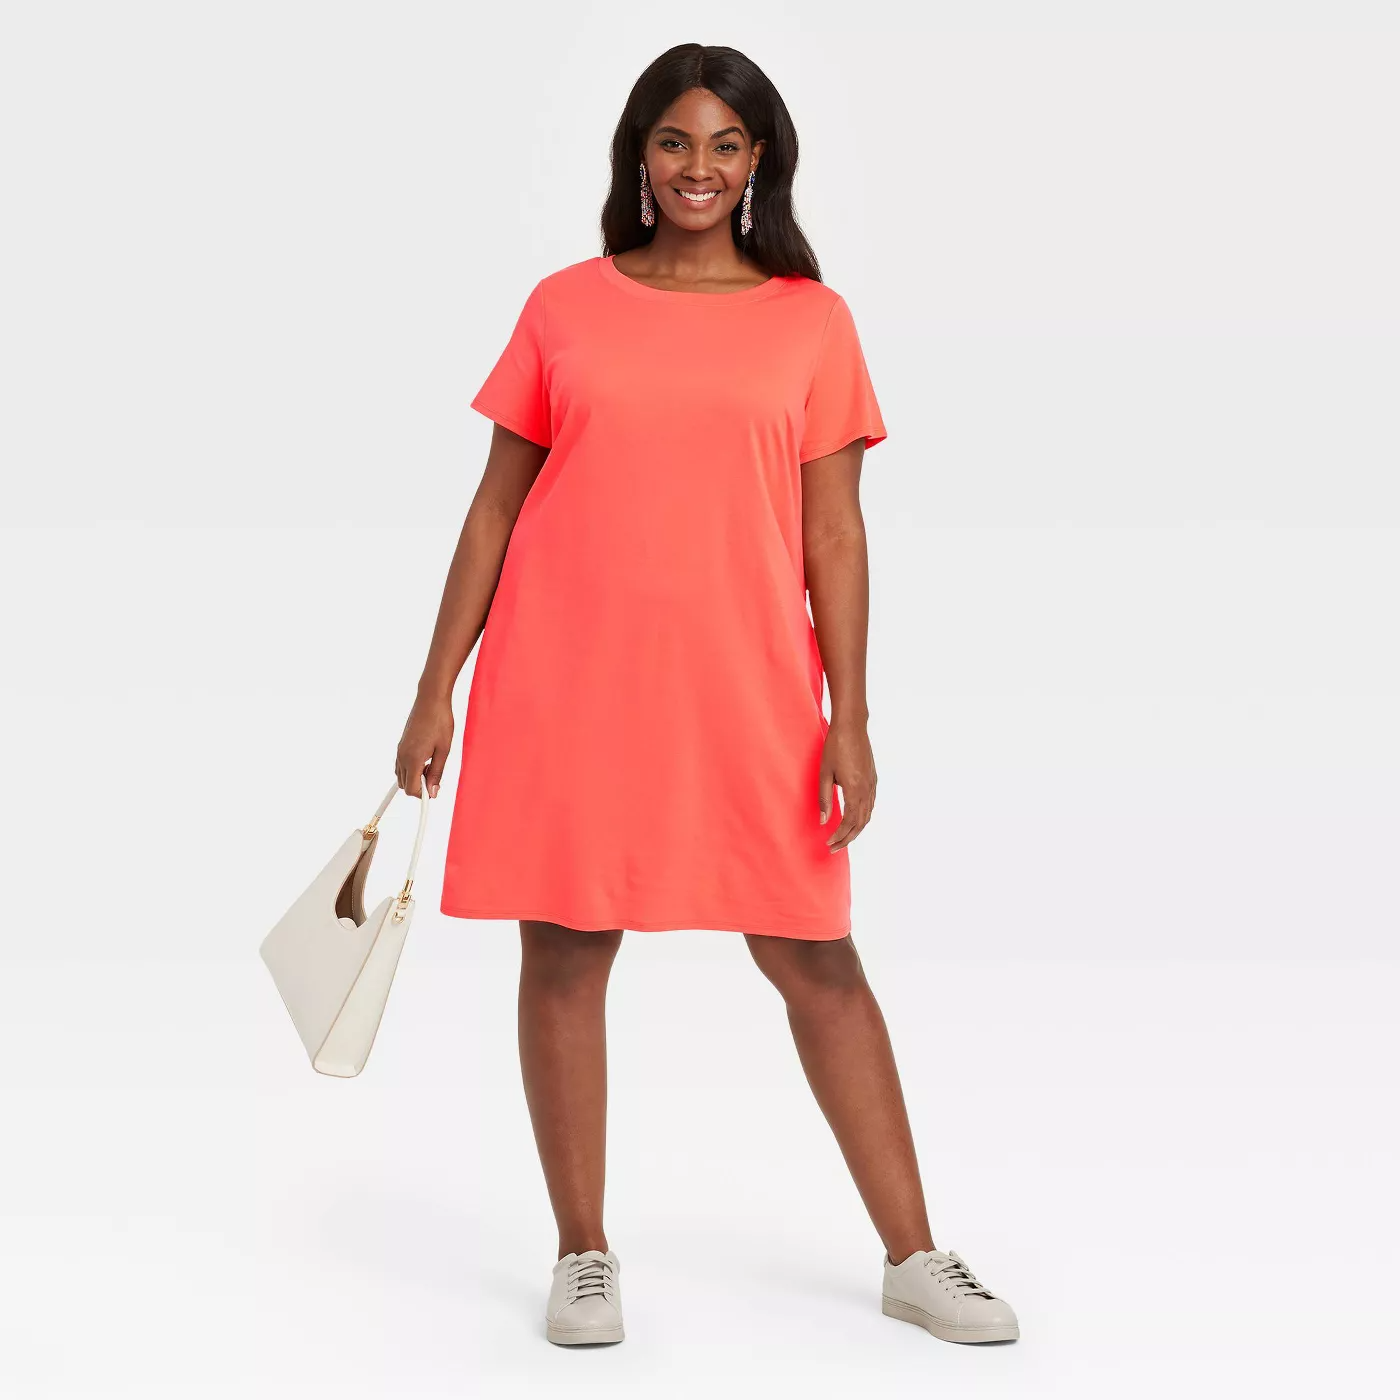 Ava & Viv Women's Plus Size Berry Dot Print Mixed Media Short Sleeve  T-Shirt - 4X